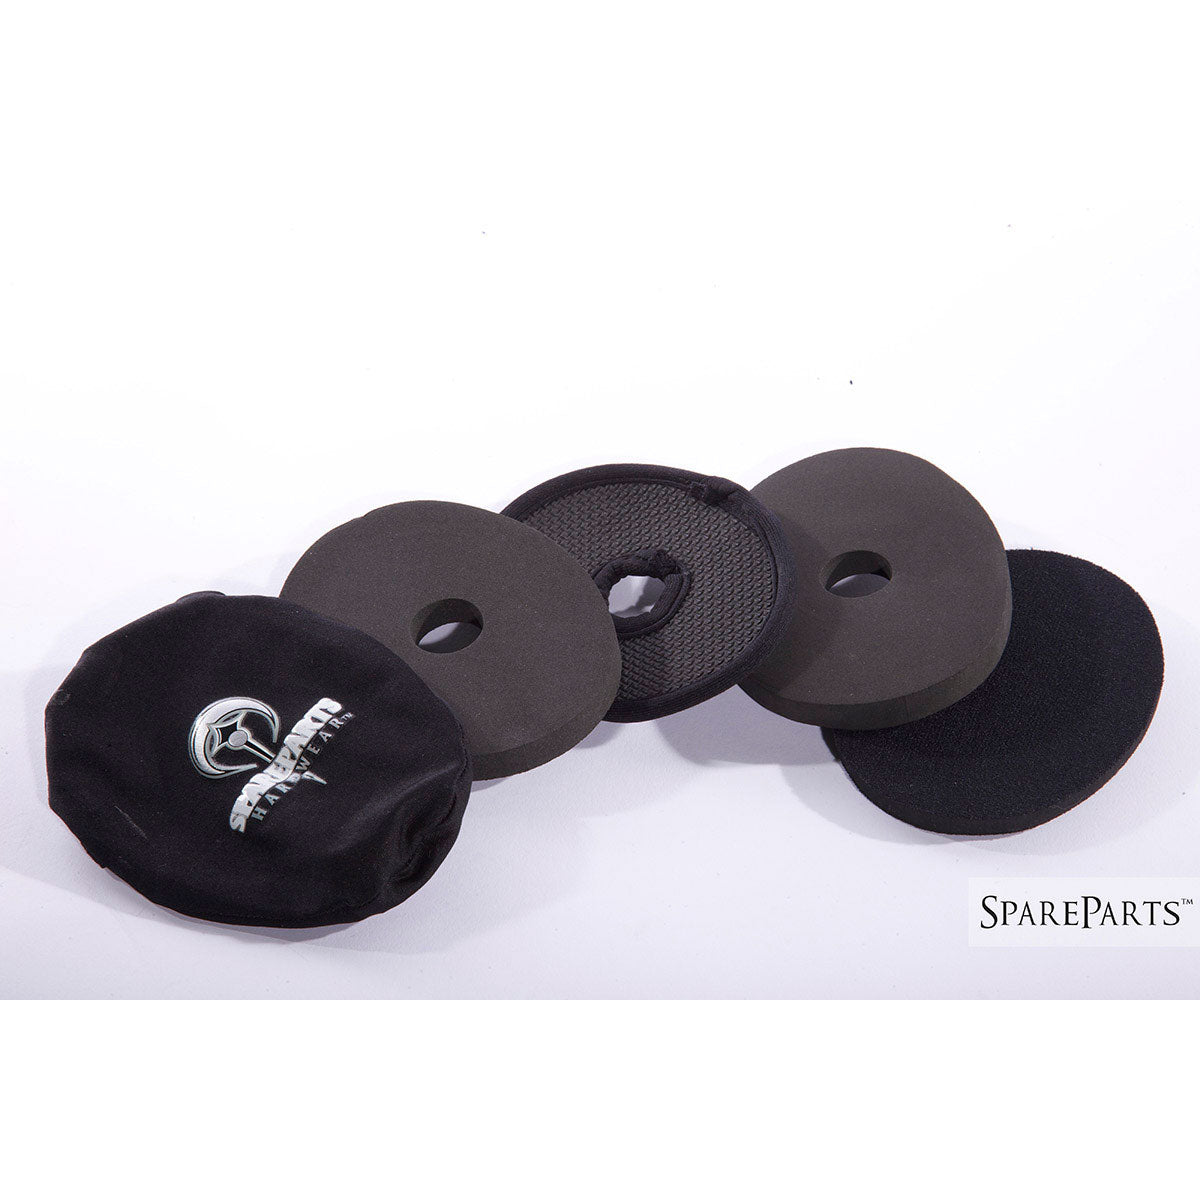 SpareParts Hardwear O-Stabilizer Dildo Ring Large